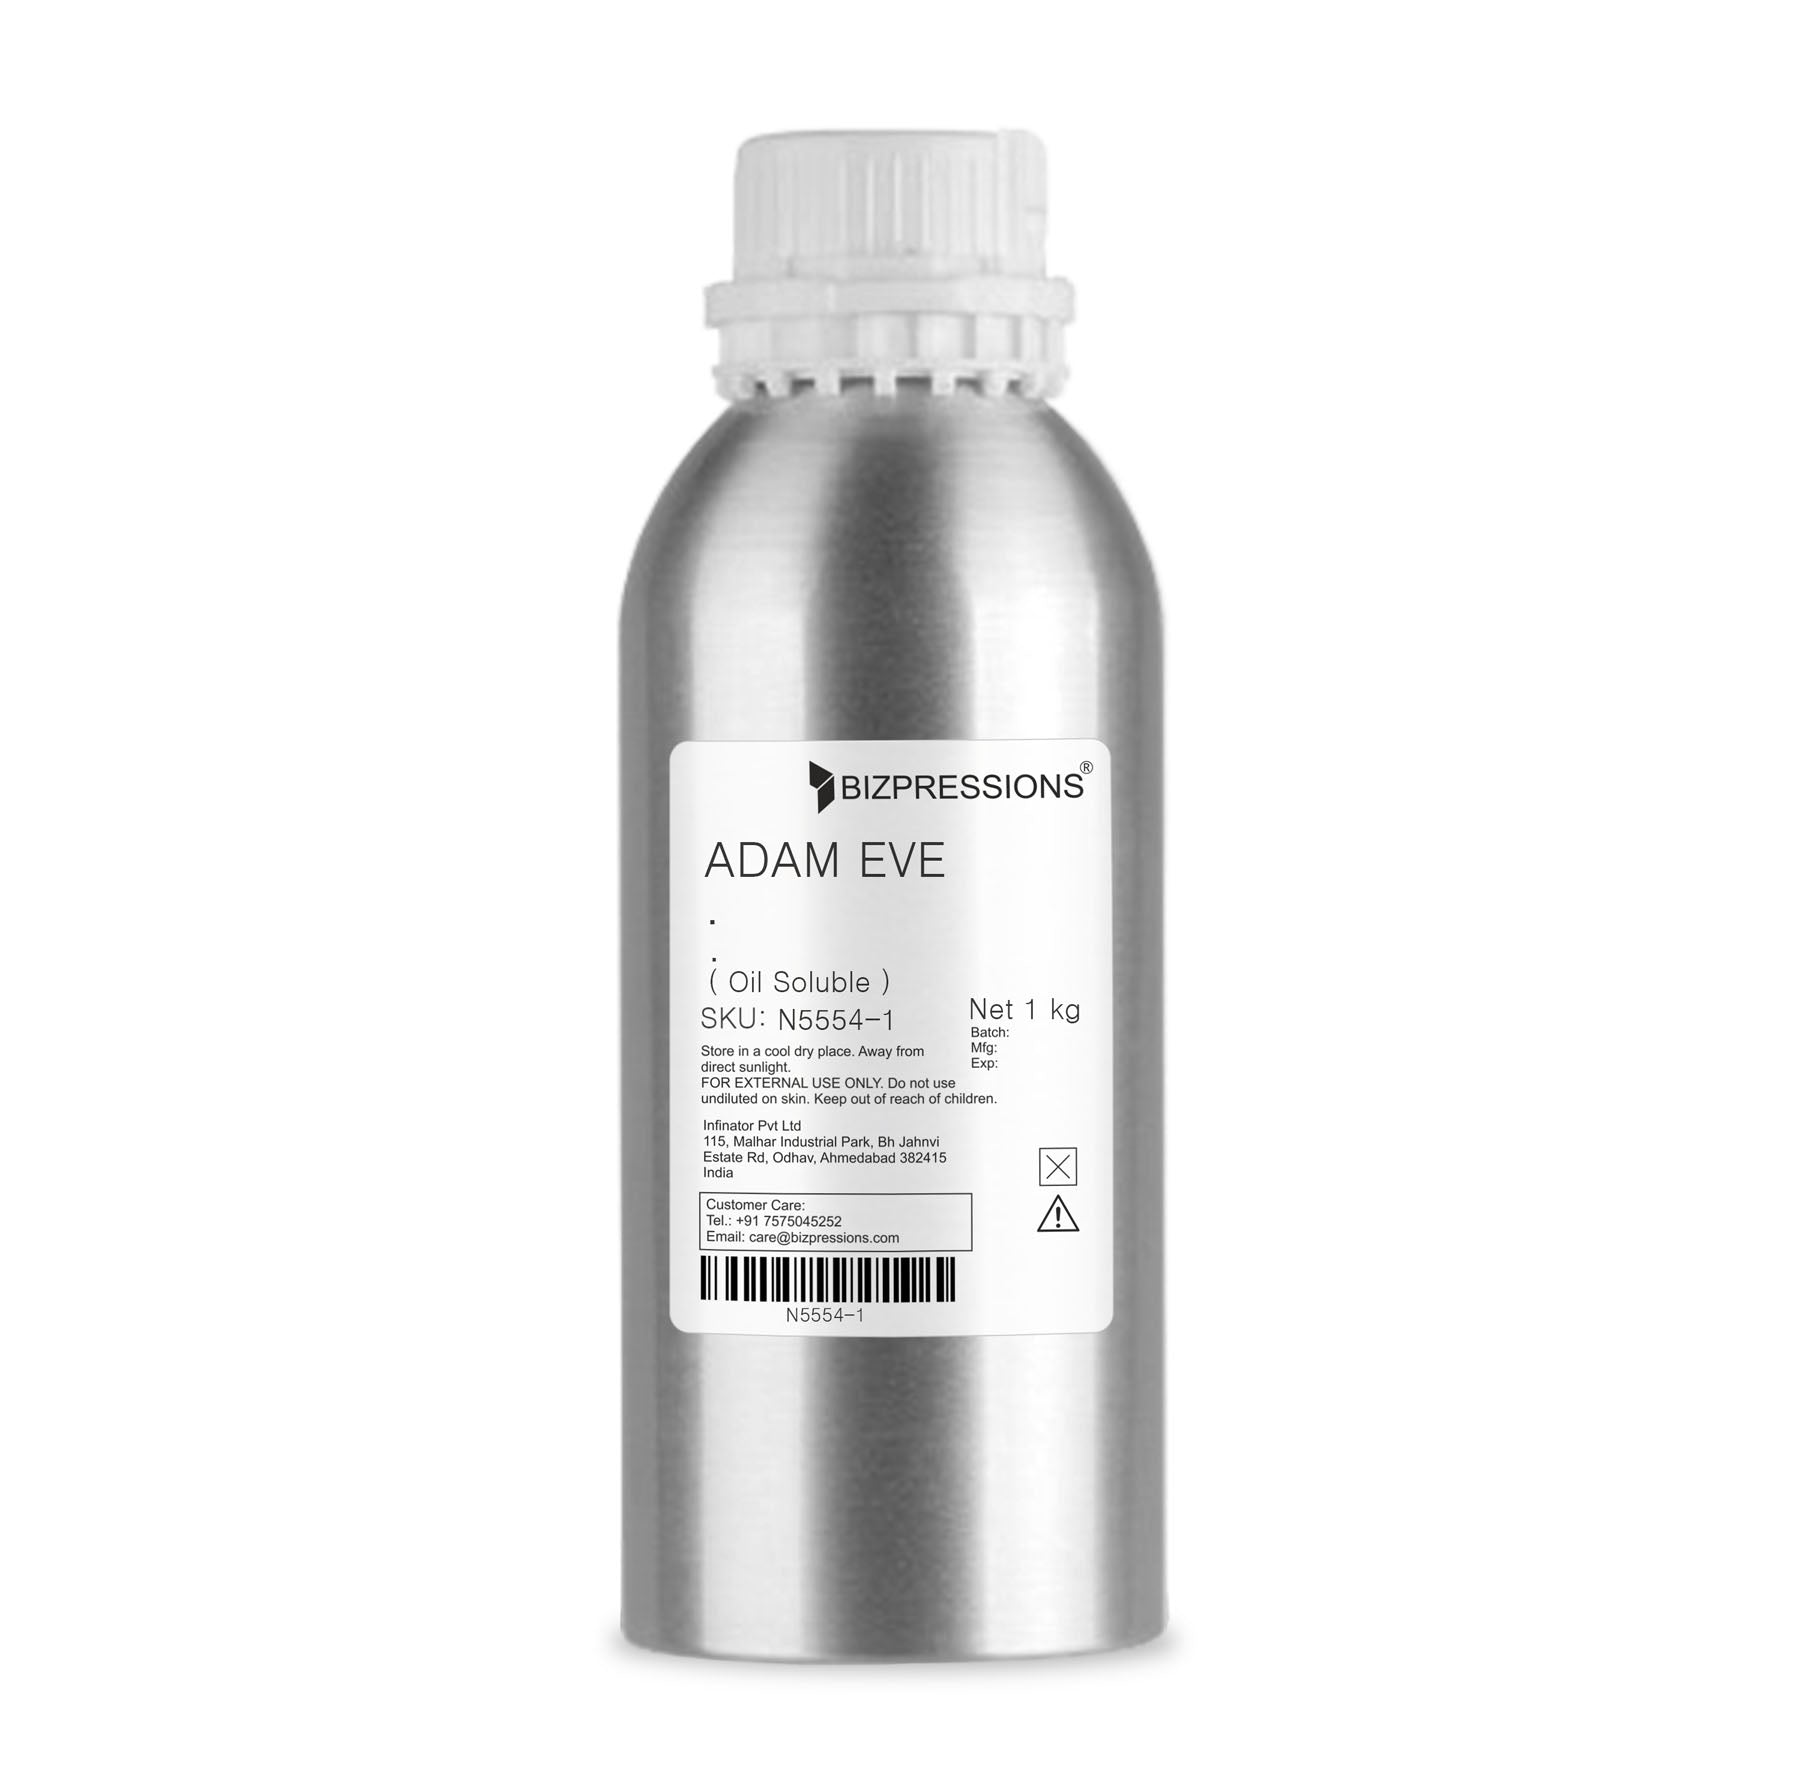 ADAM EVE - Fragrance ( Oil Soluble ) - 1 kg